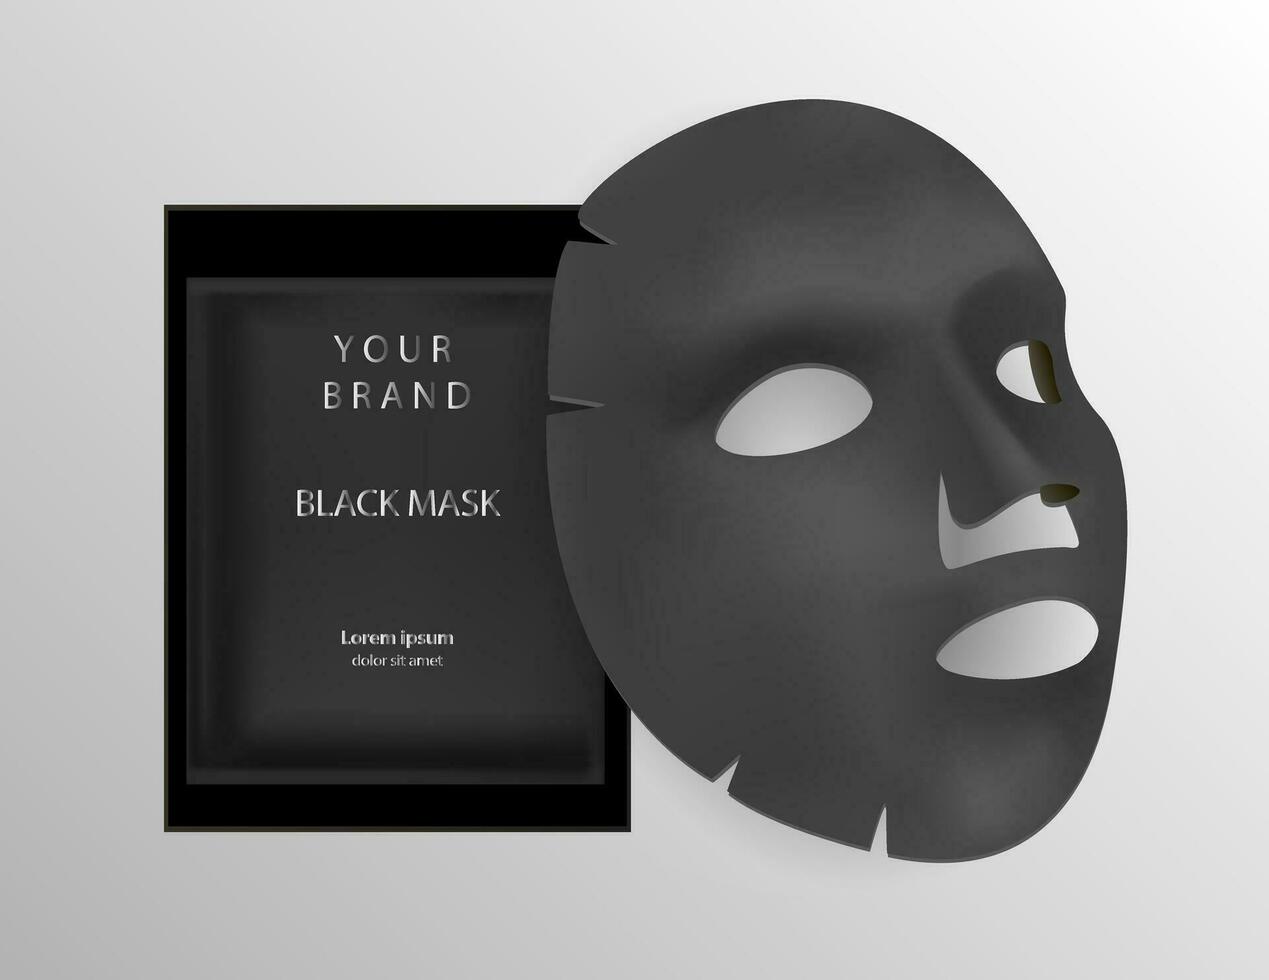 negro facial sábana máscara productos cosméticos anuncios 3d realista vector ilustración. paquete diseño para cara máscara aislado en antecedentes.